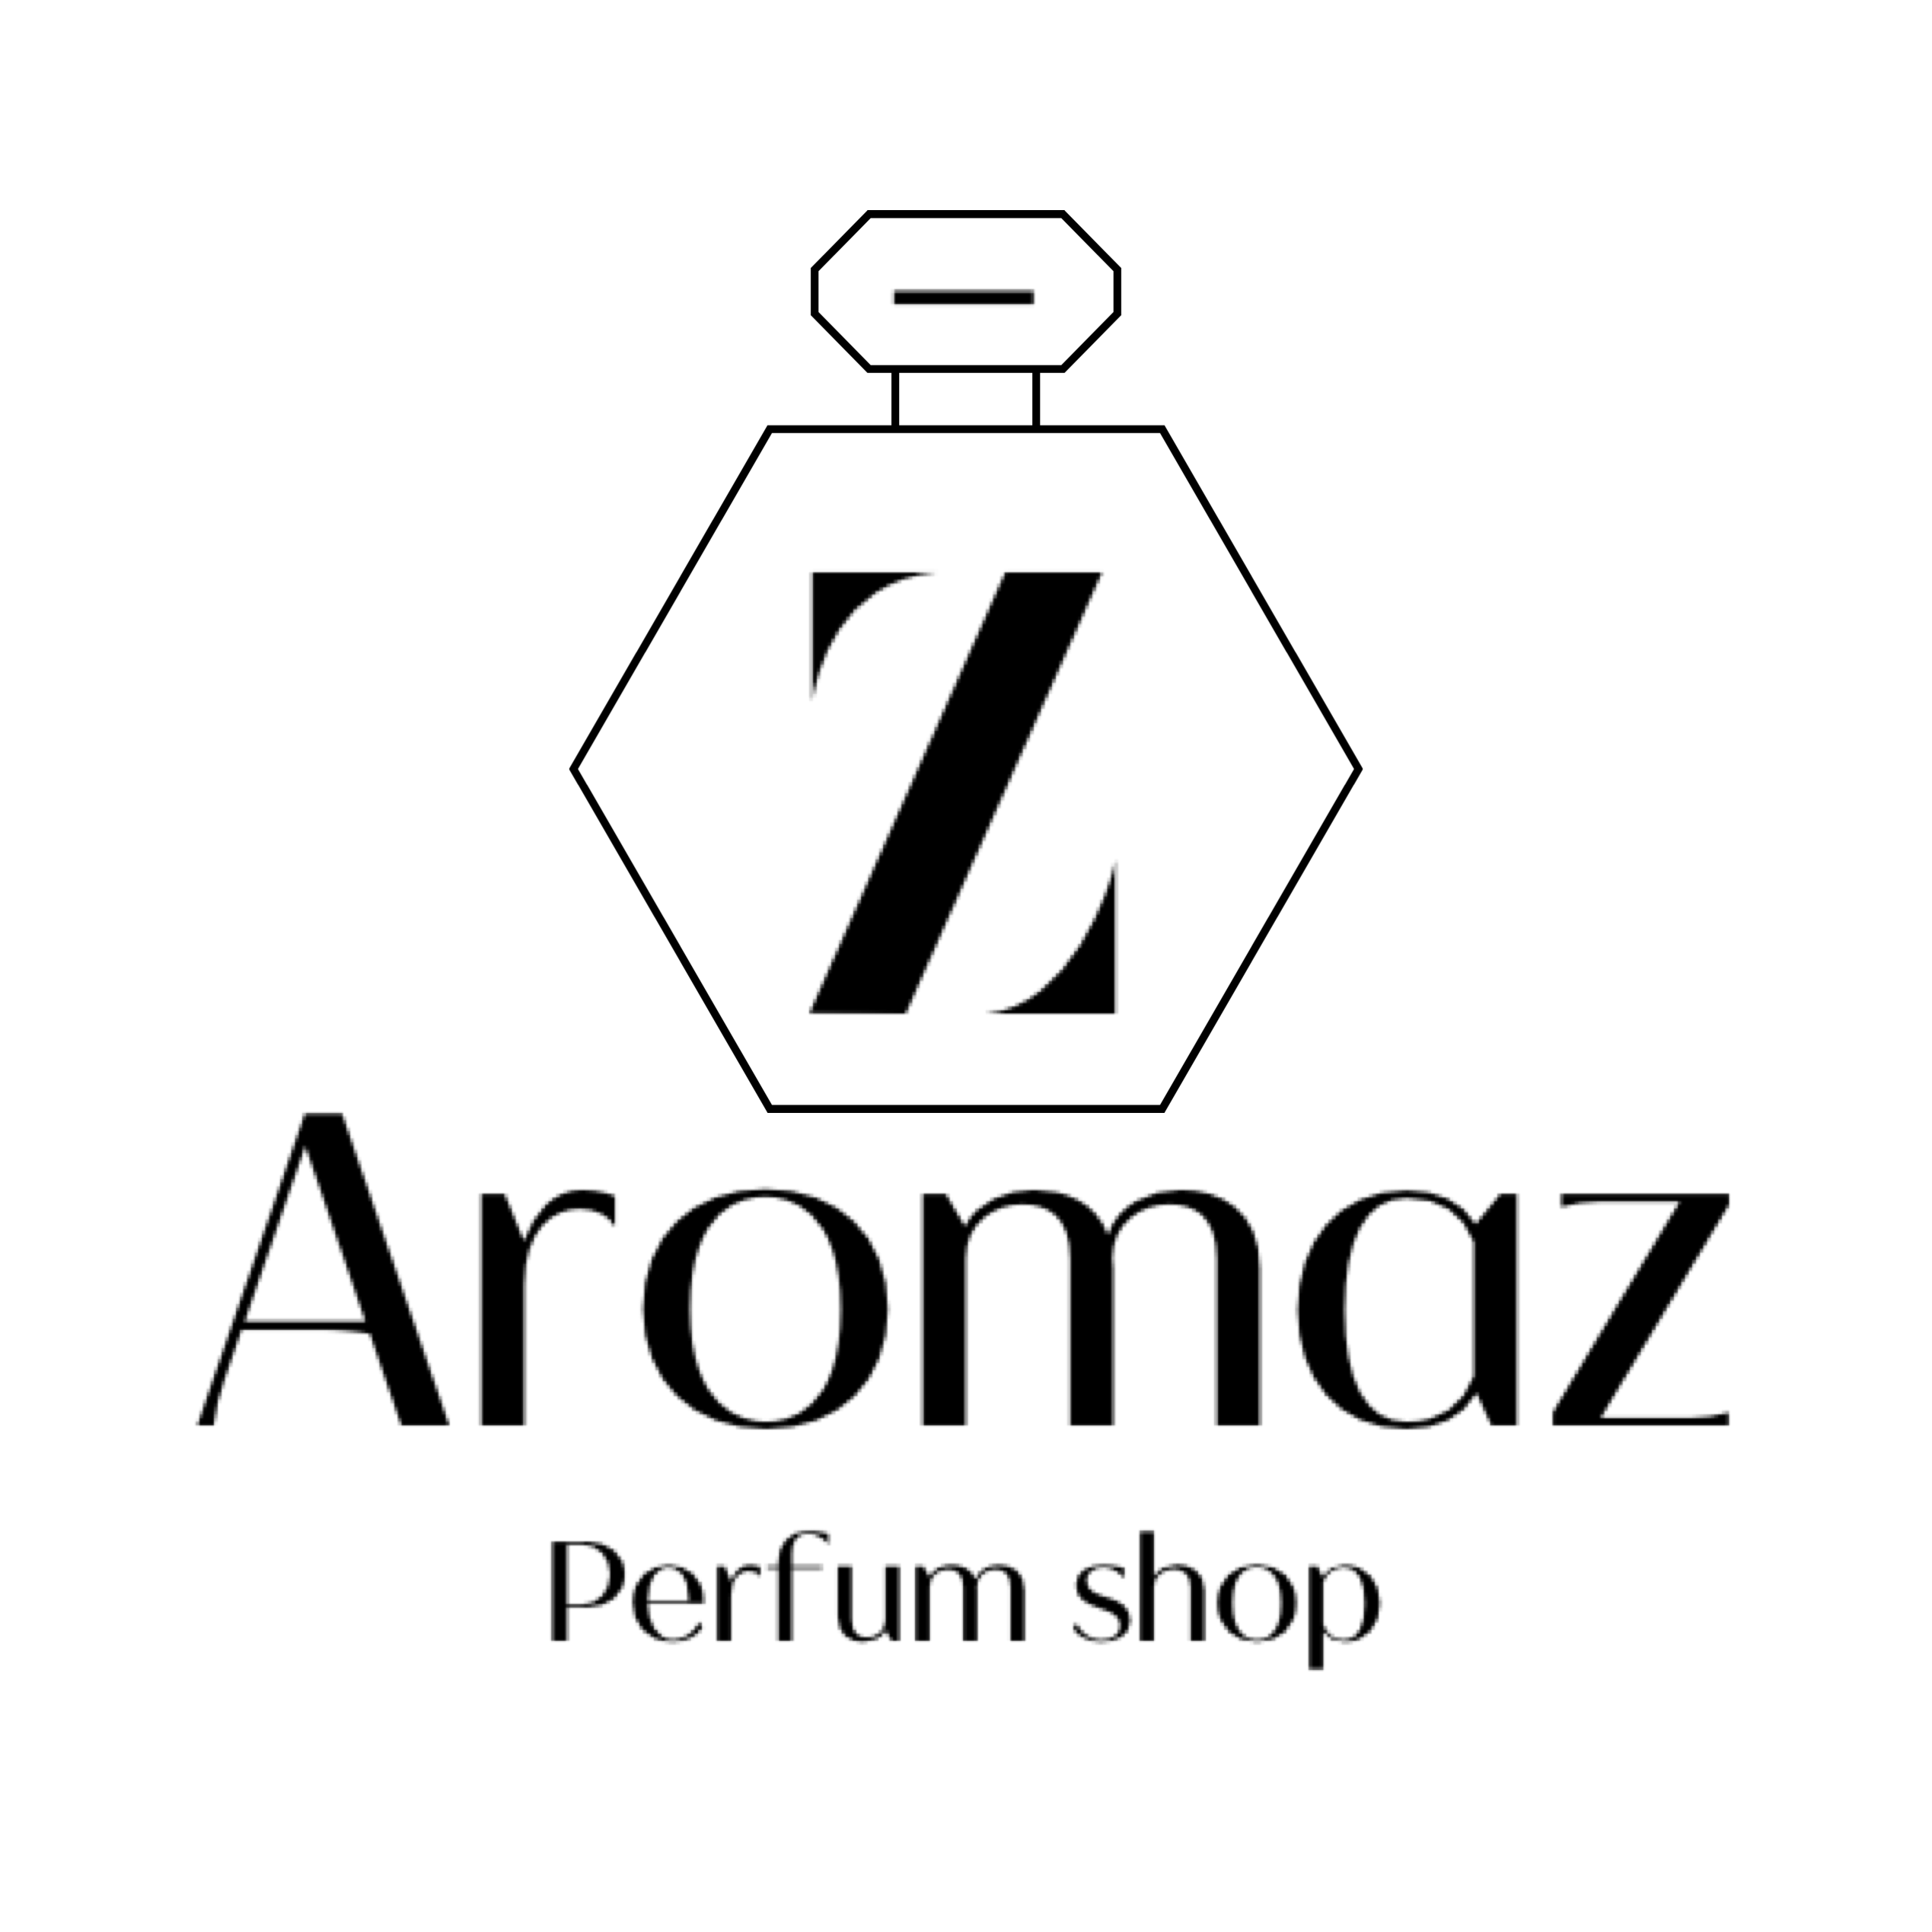 Aromaz perfum shop